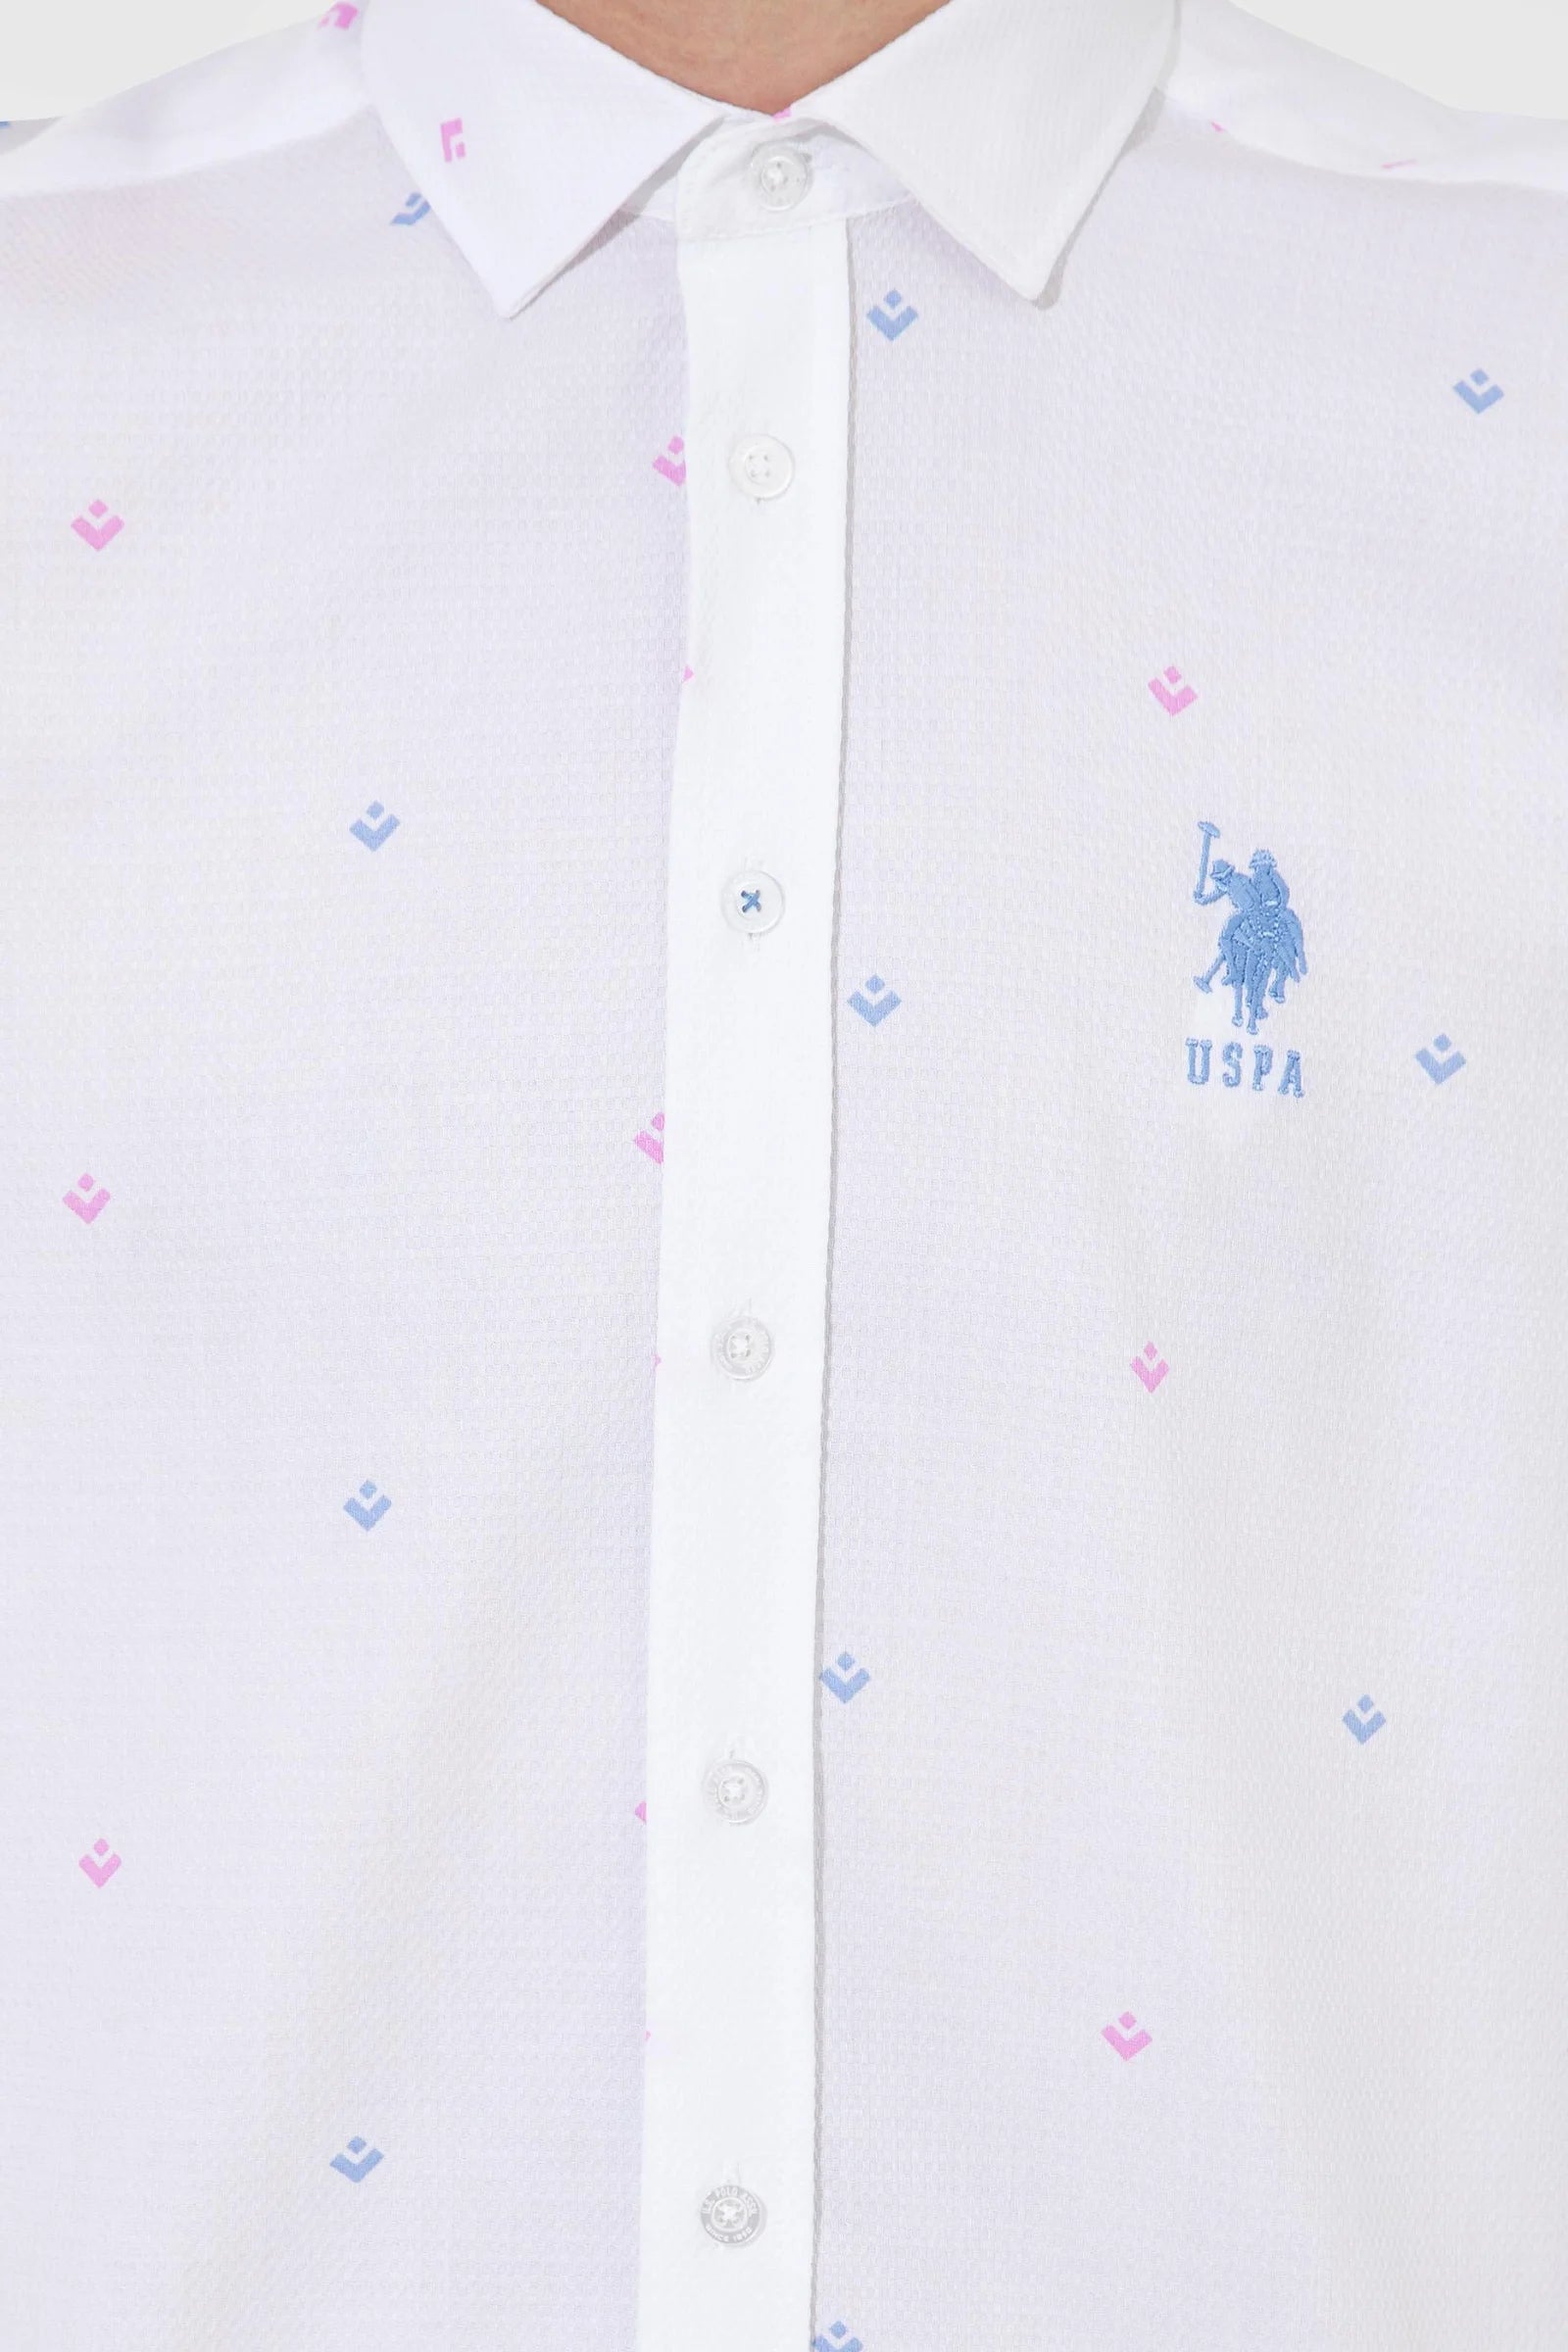 US Polo Assn. Slim Blue/Pink Shirt Long Sleeve USPA Logo - Men